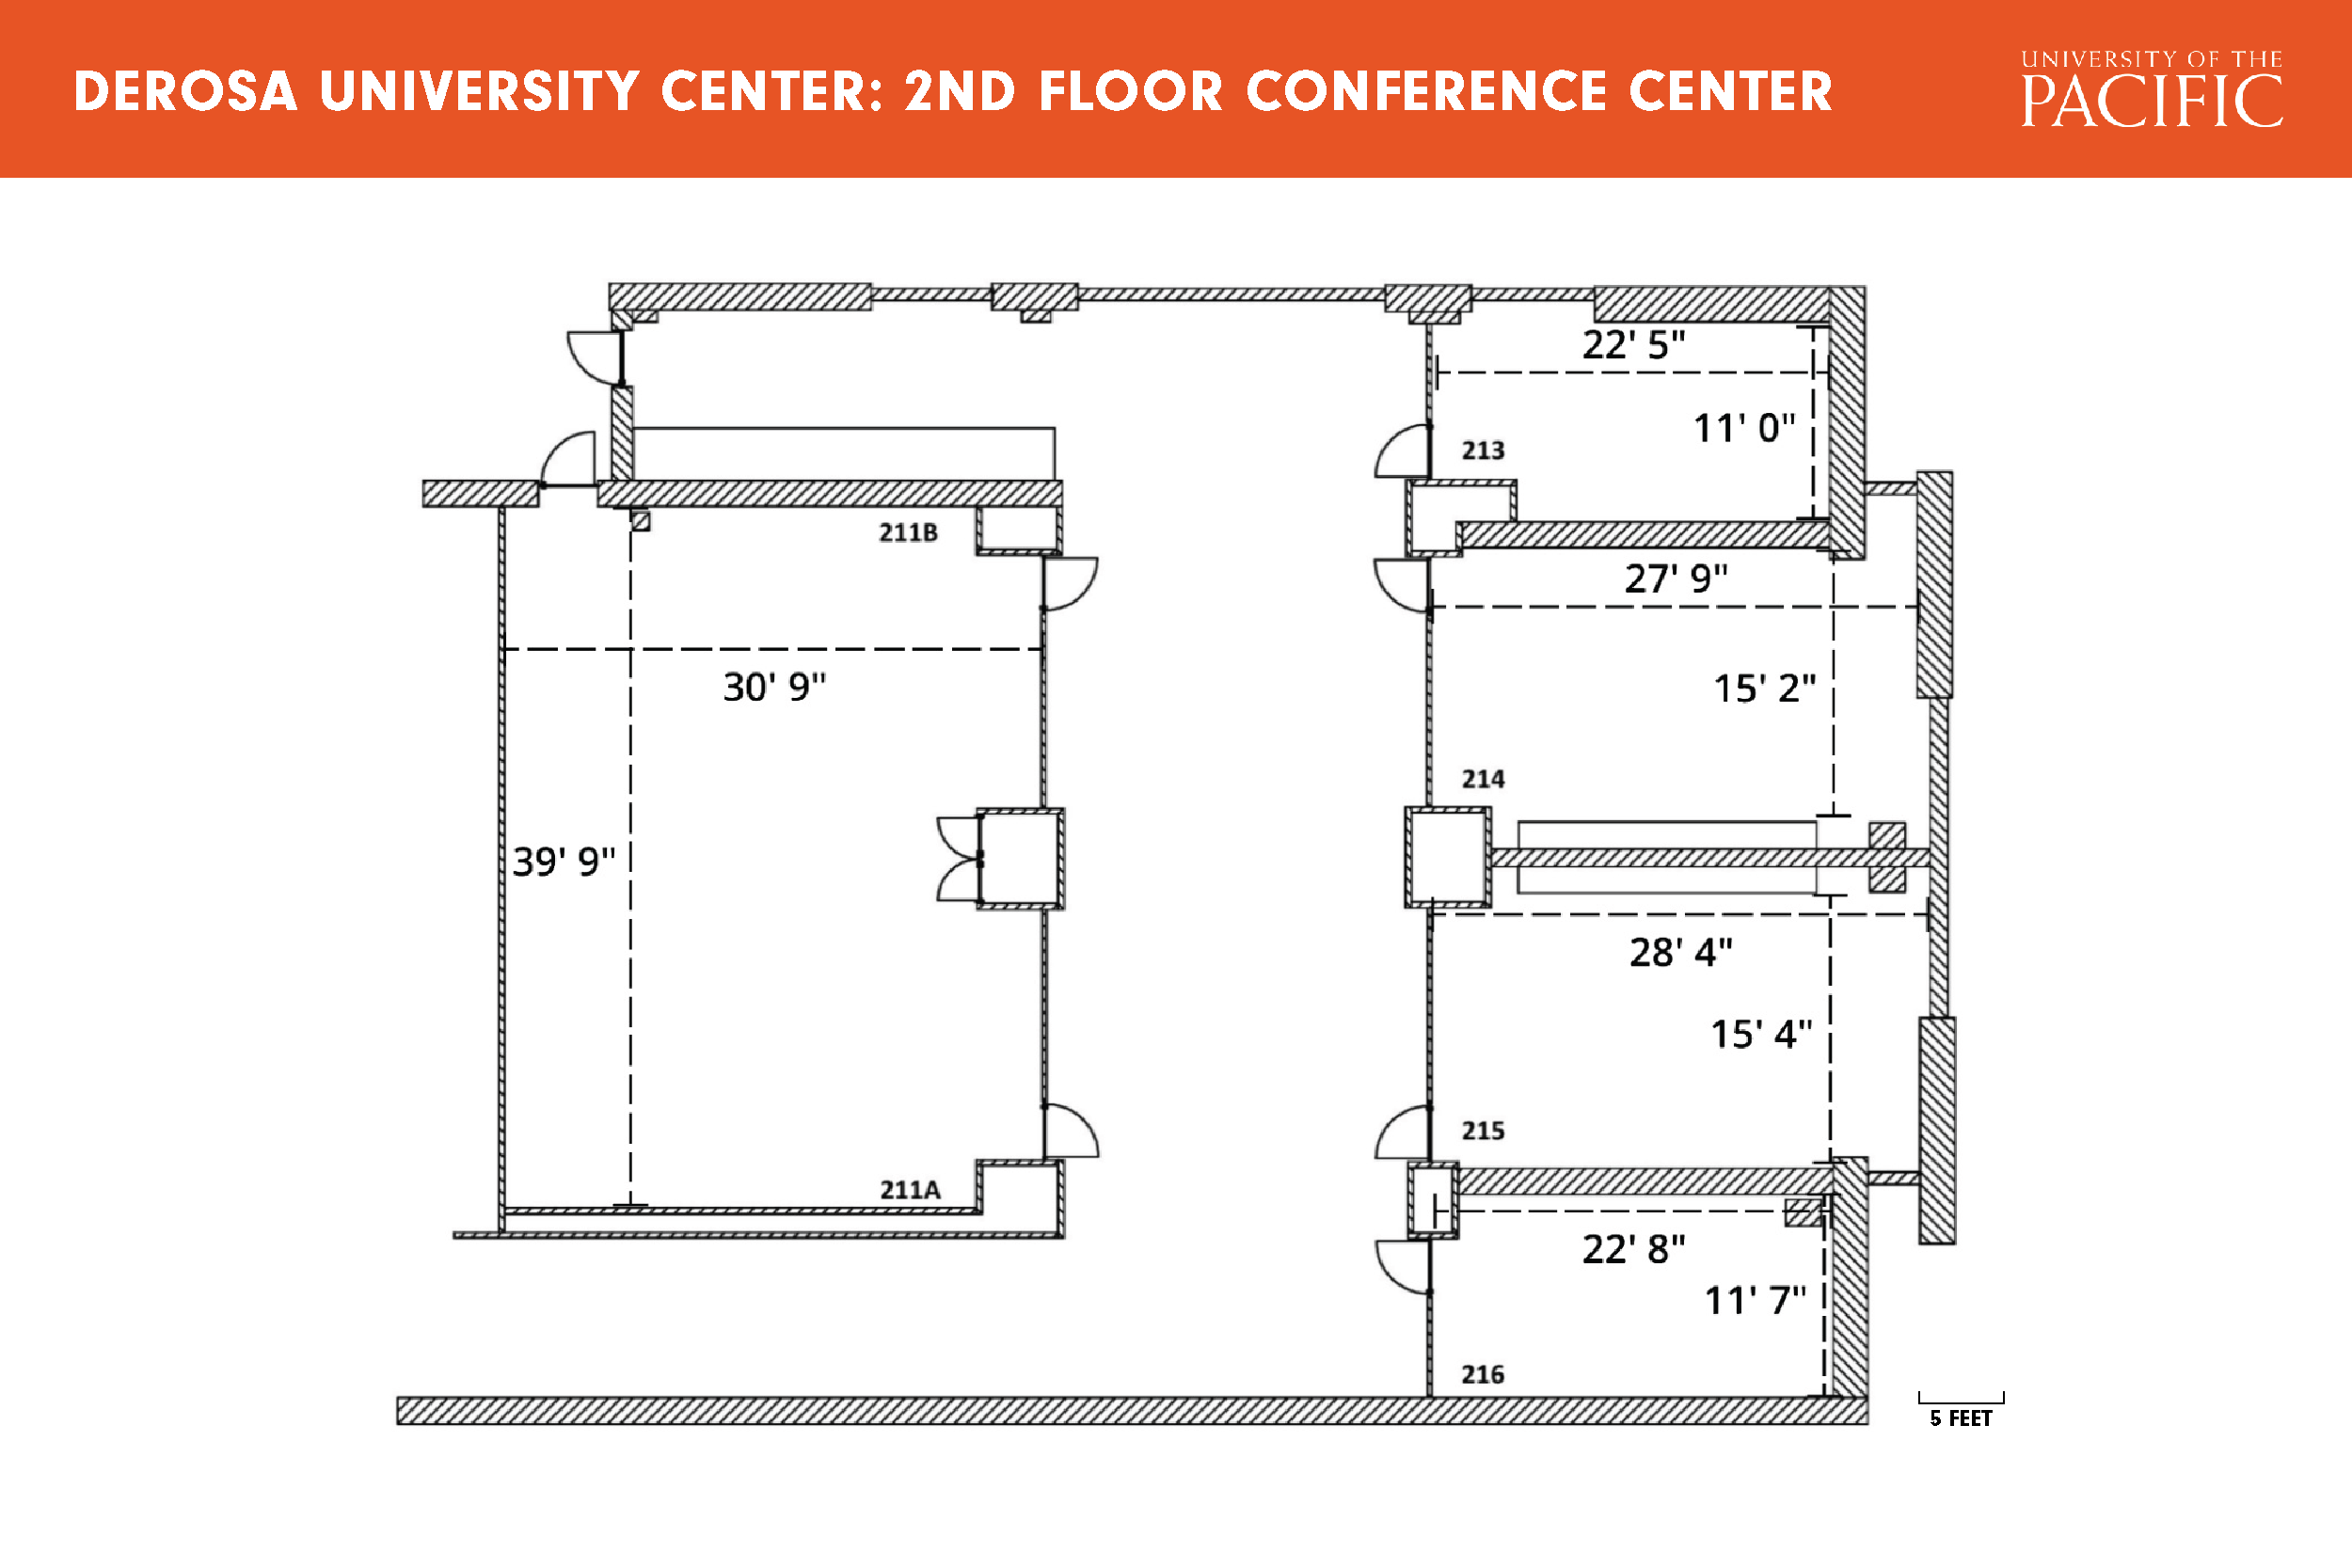 DUC Conference Center floor plan